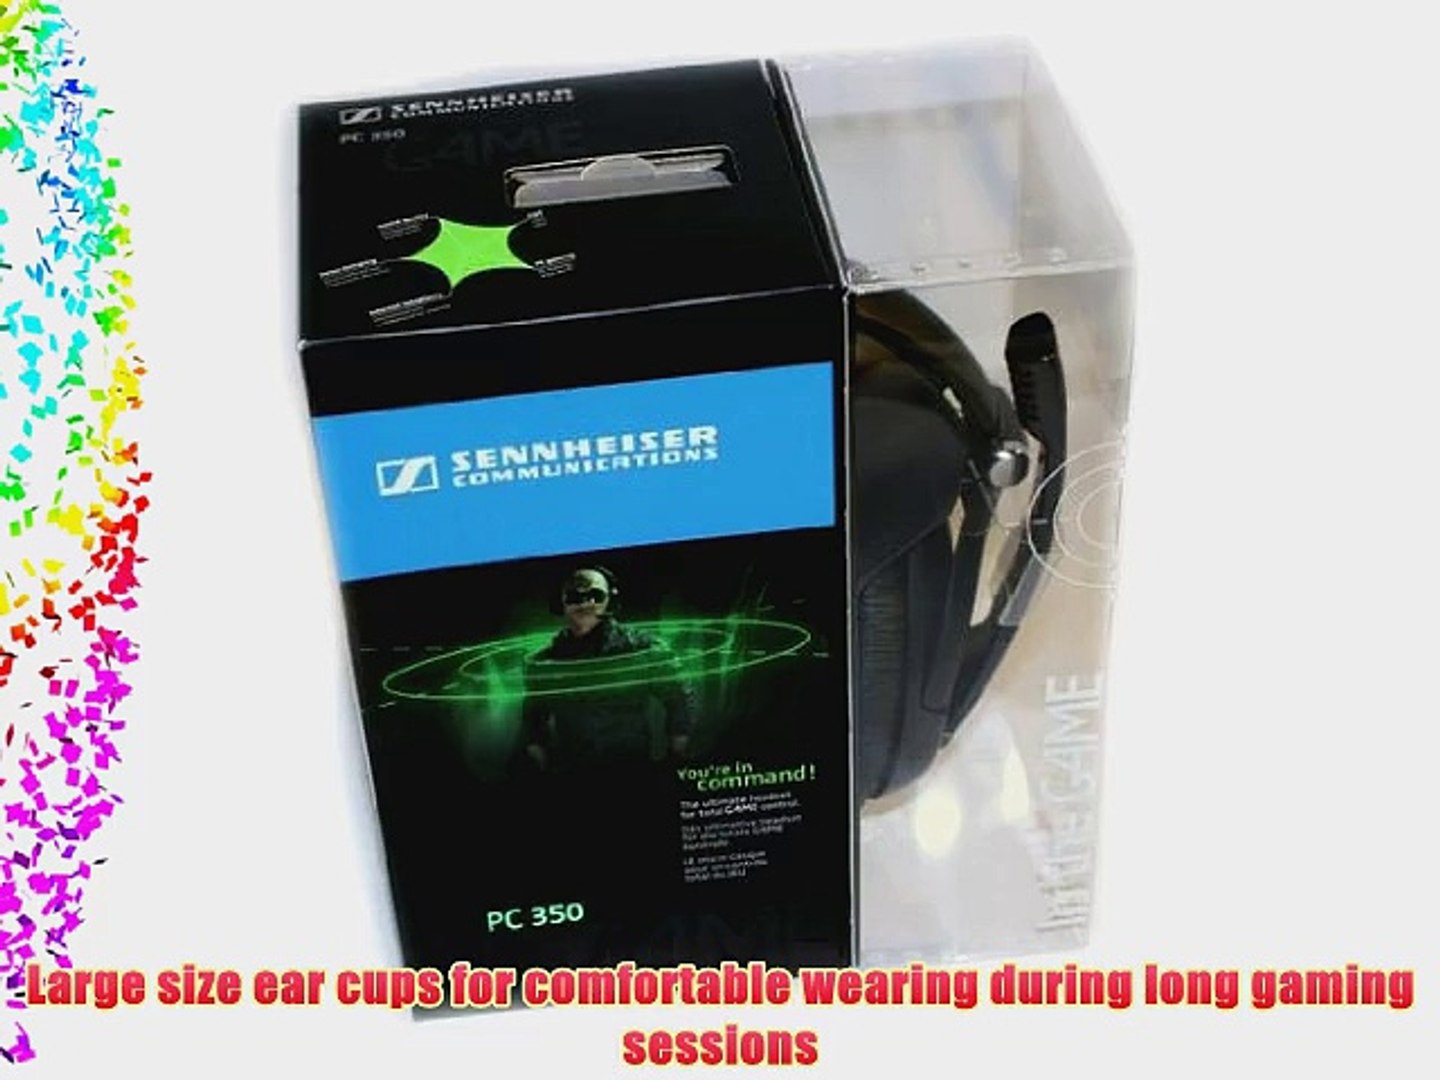 sennheiser pc 131 binaural headset with volume control and microphone mute